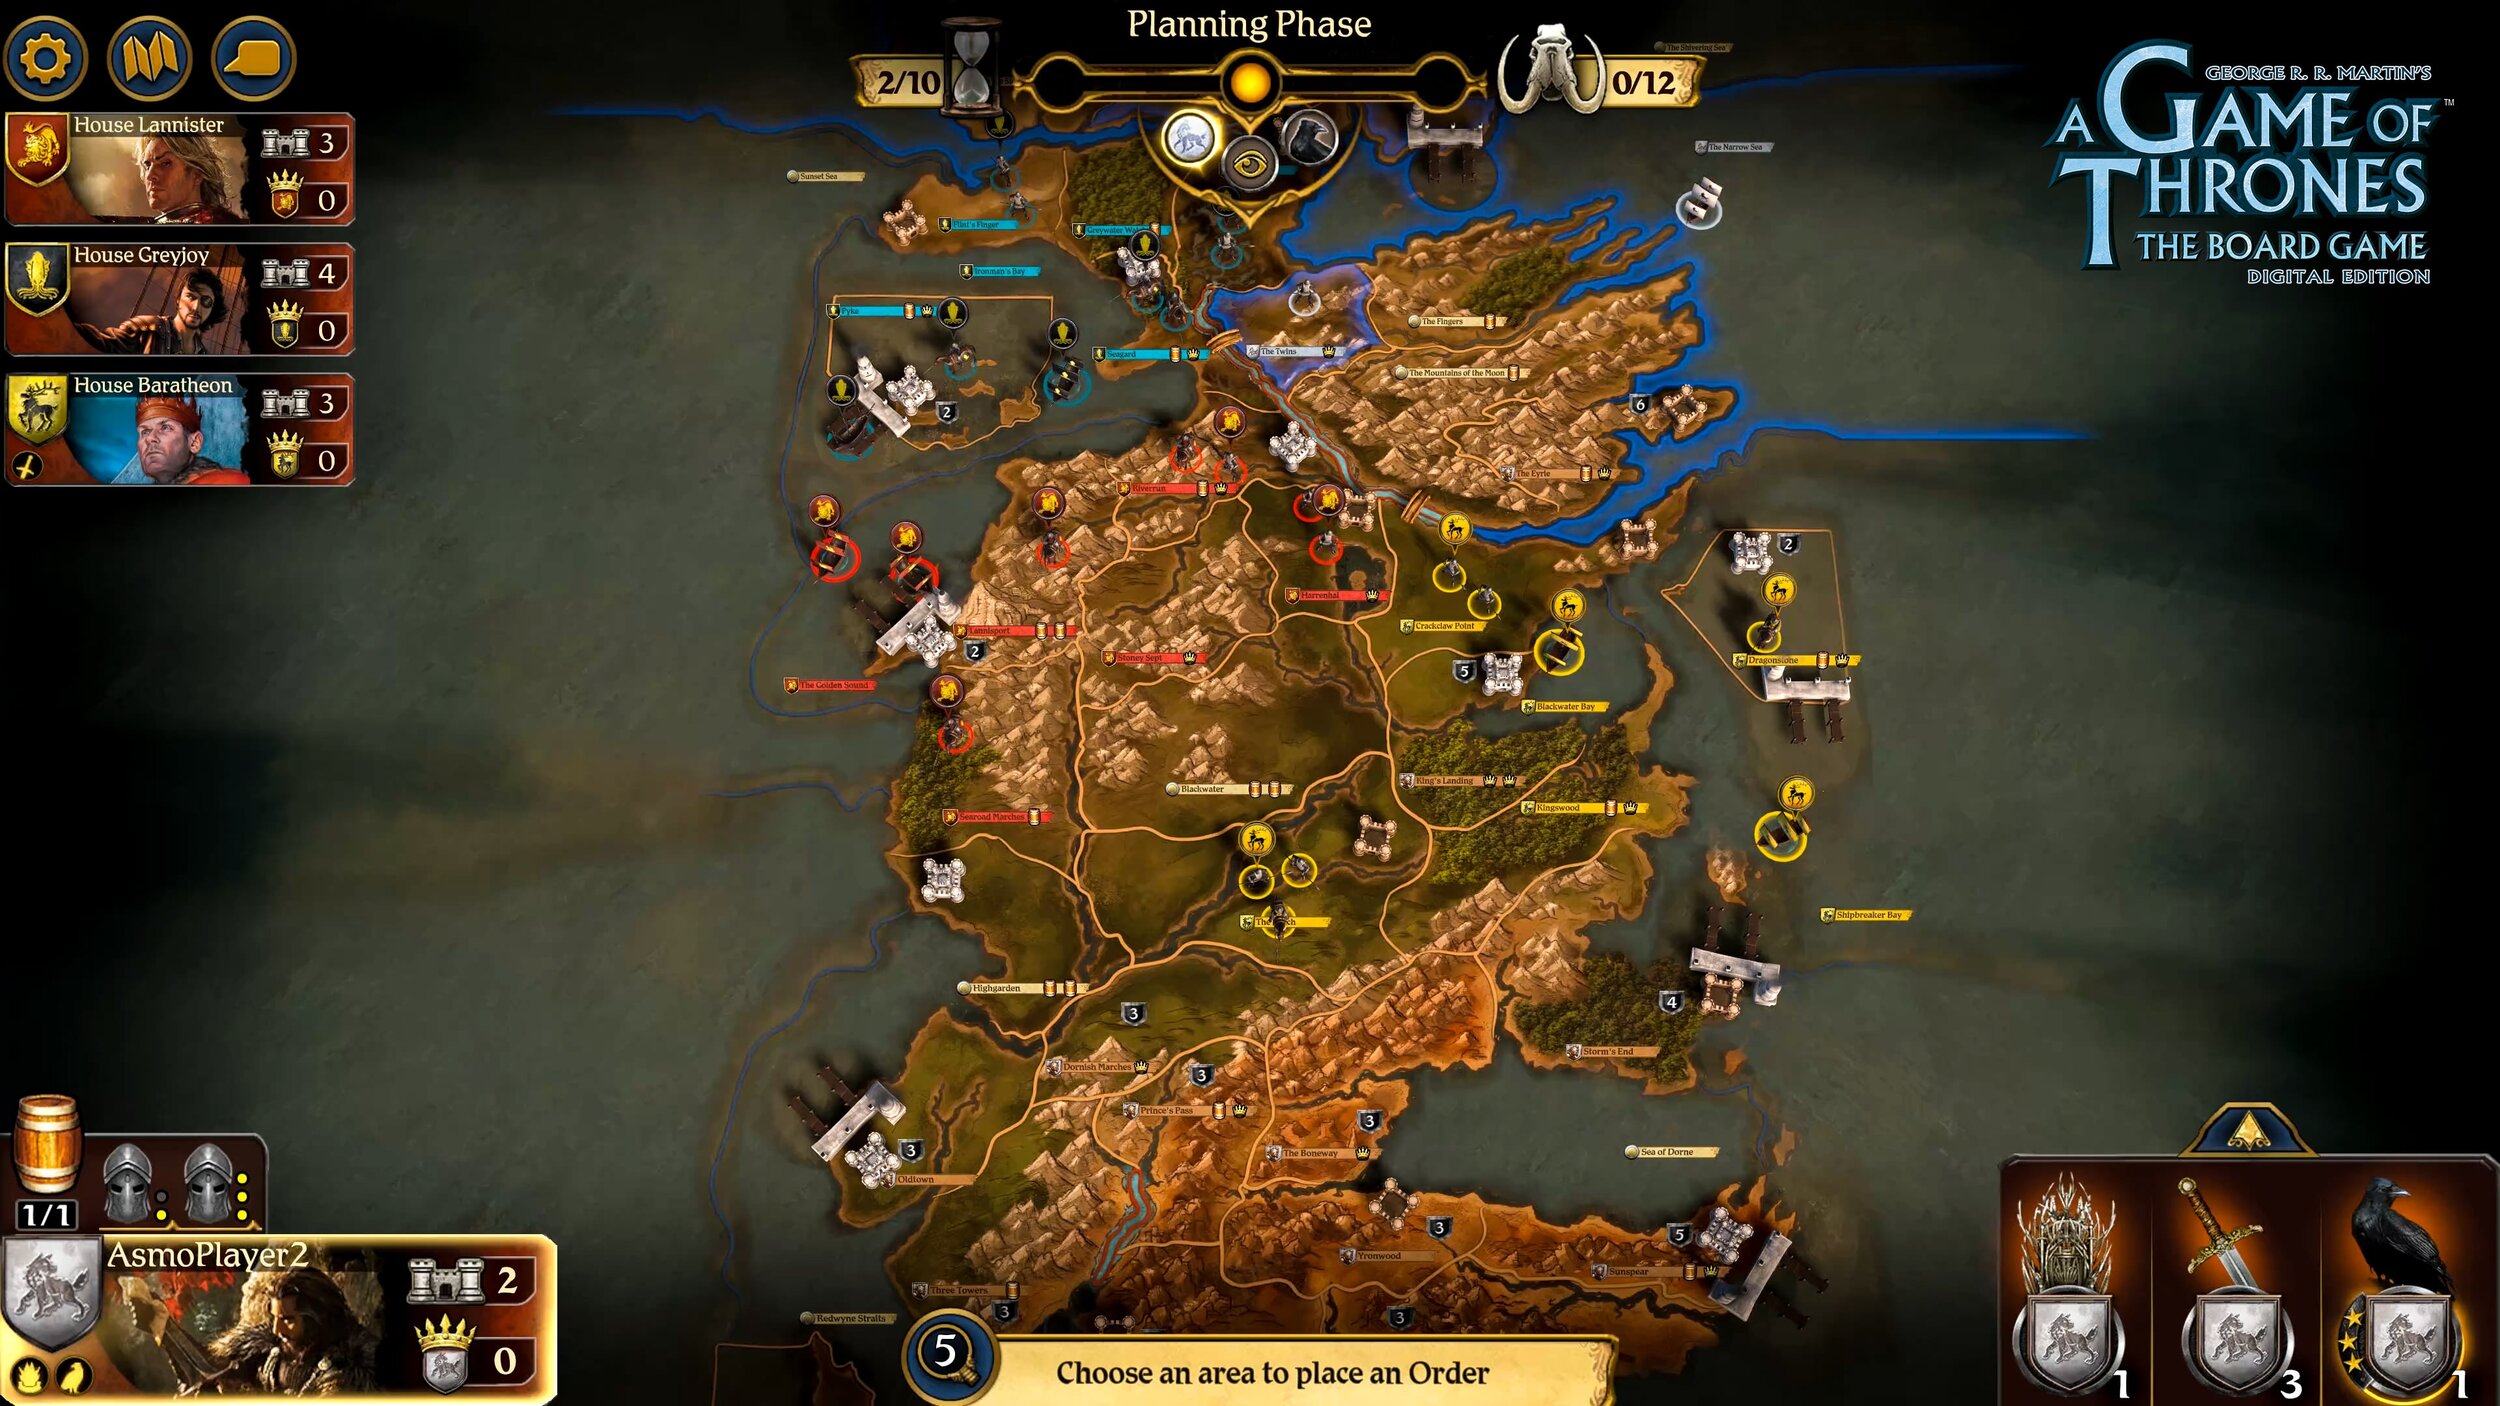 A Game of Thrones: The Board Game - Digital Edition - Screenshot 1.jpg